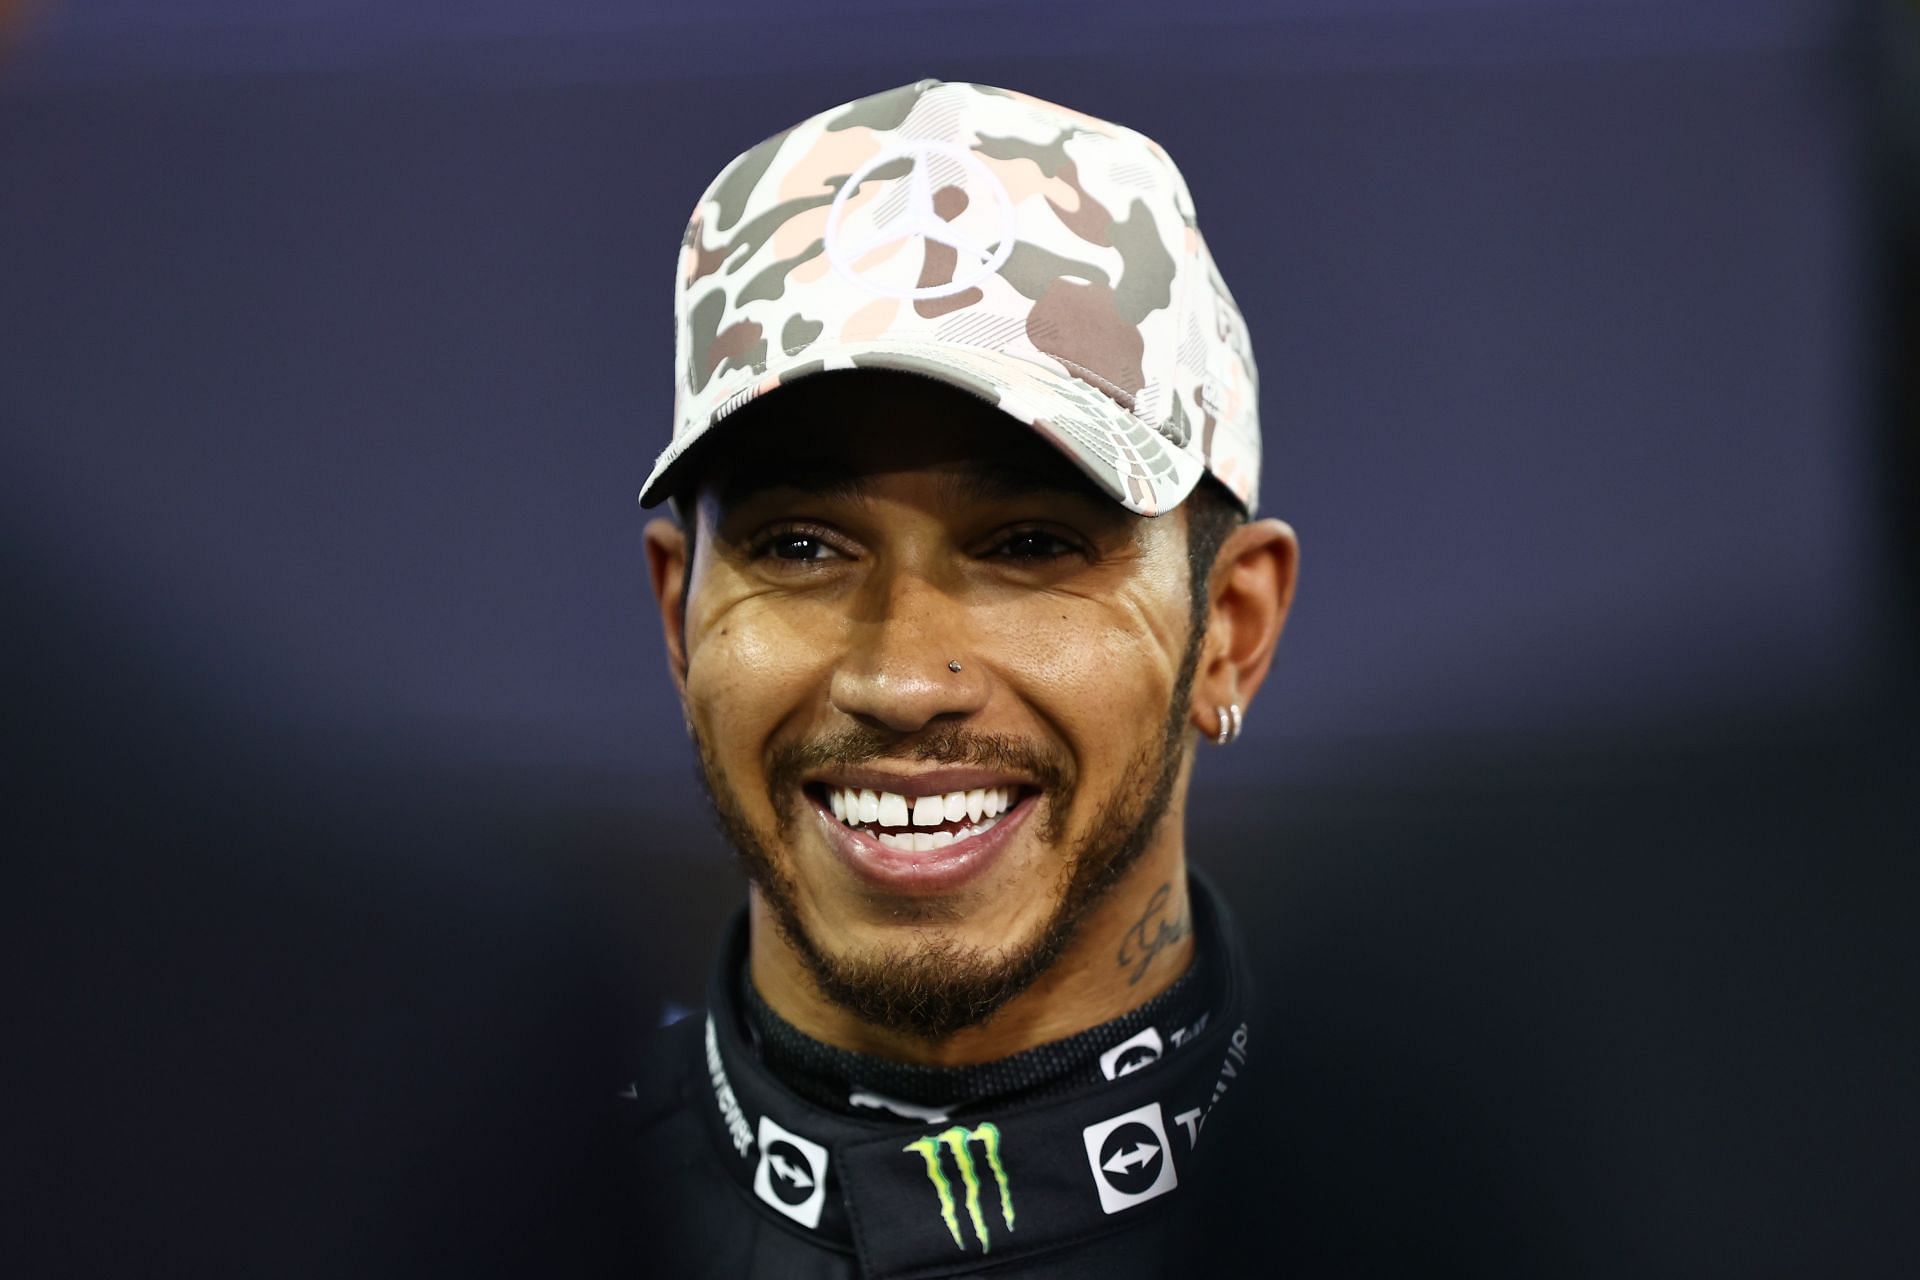 F1 Grand Prix of Abu Dhabi - A smiling Lewis Hamilton ahead of qualifying at Yas Marina